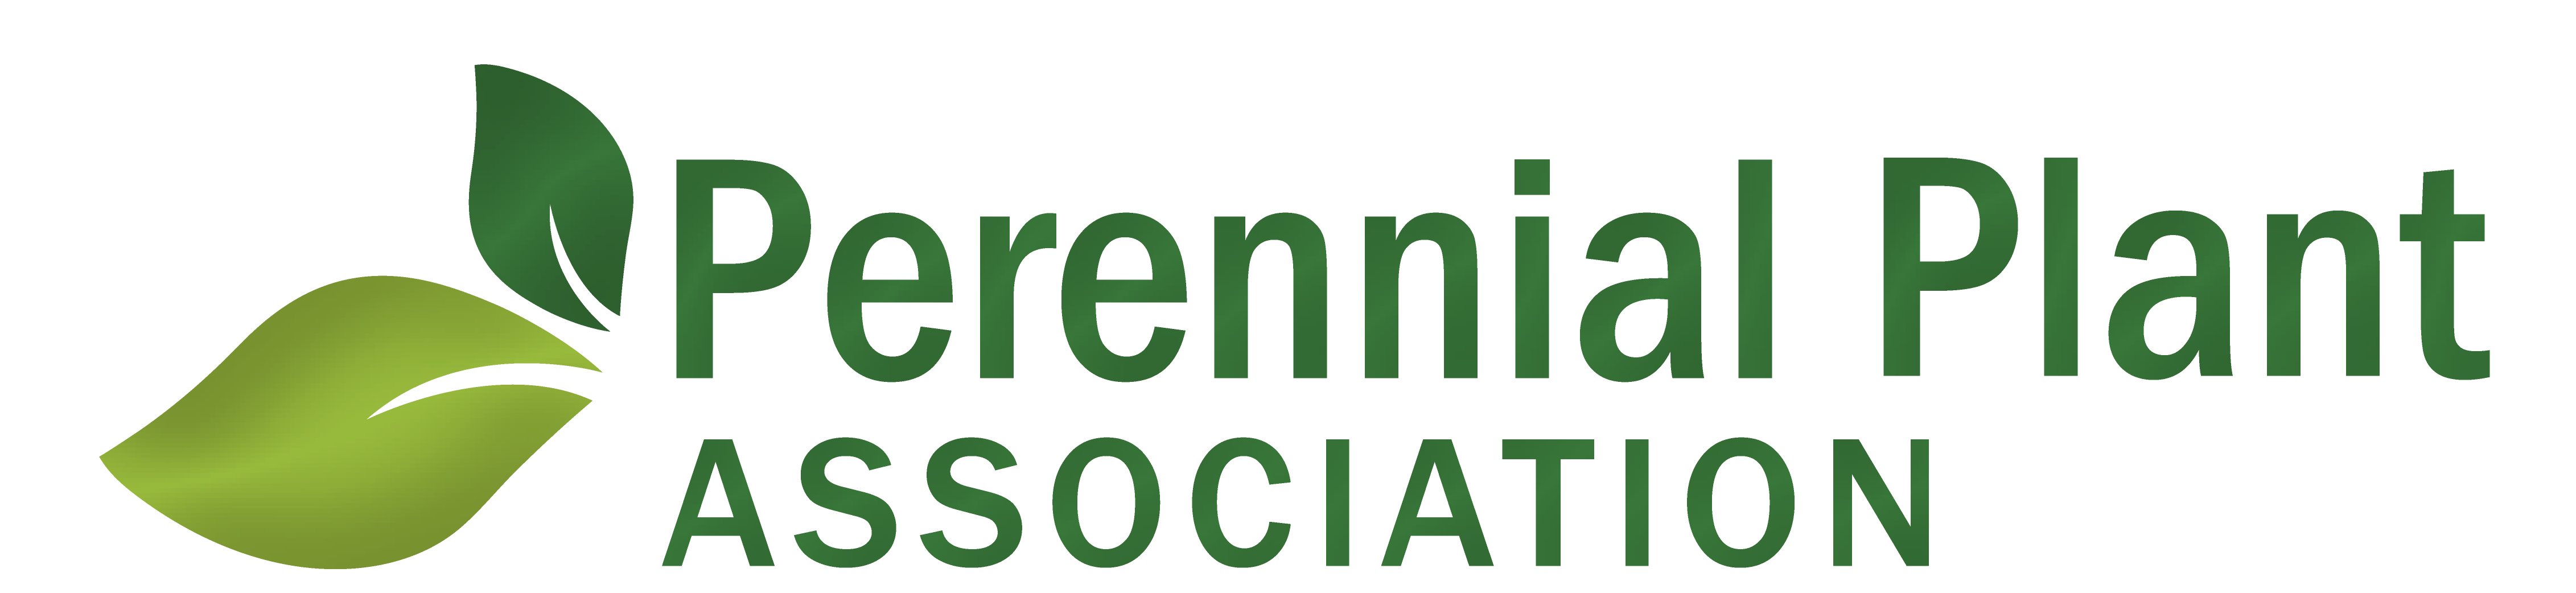 perennial plant association logo